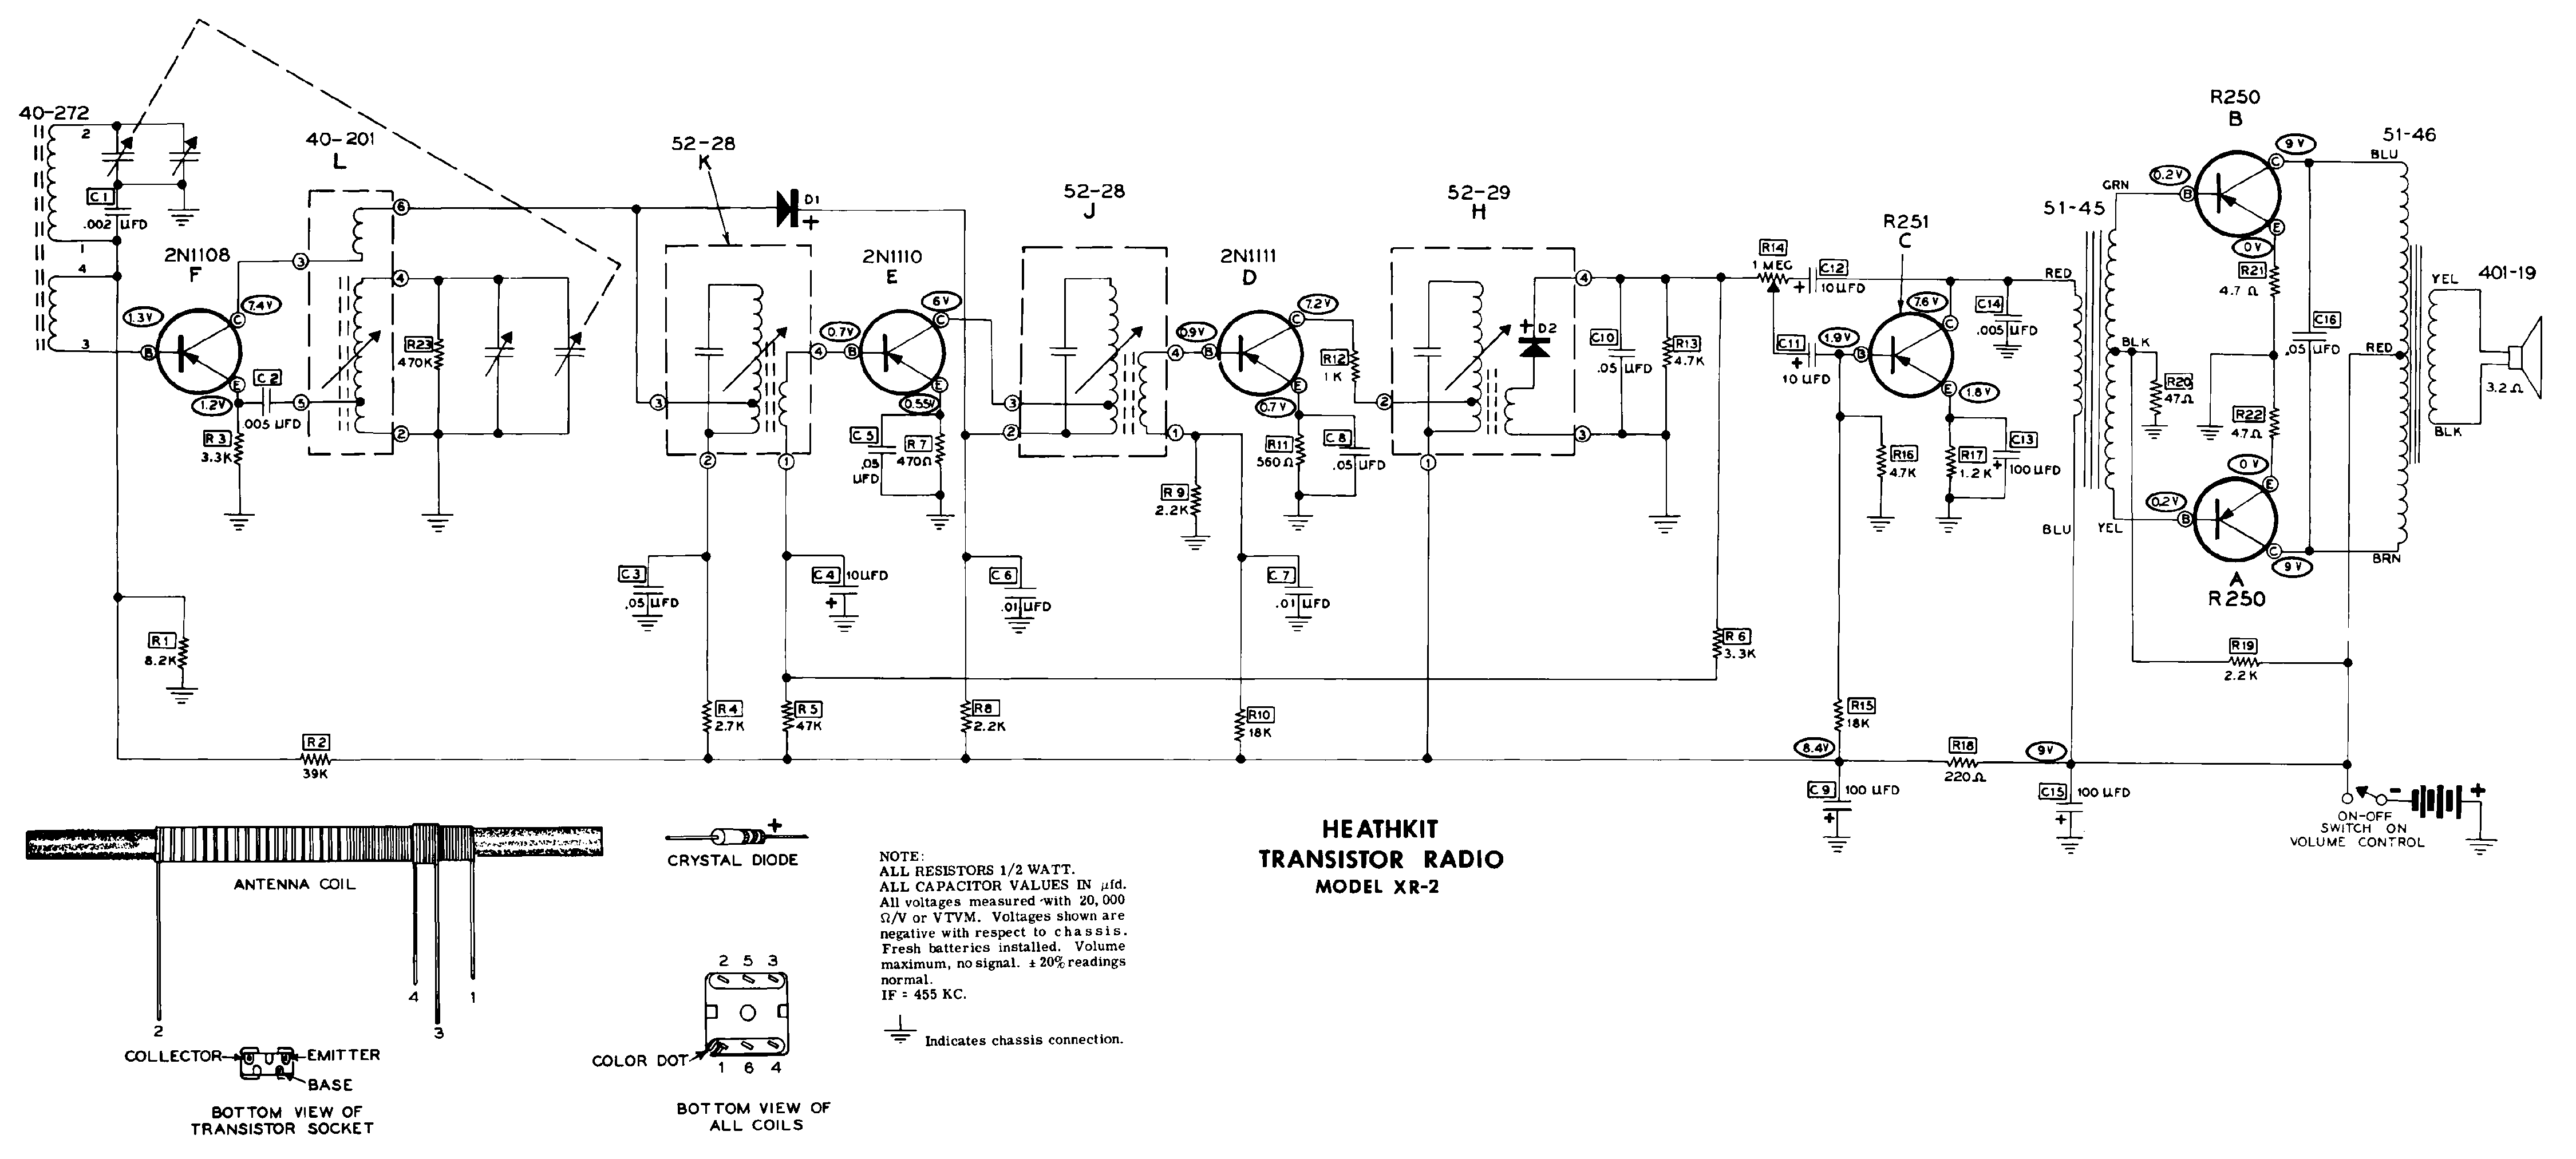 sony transistor radio schematic